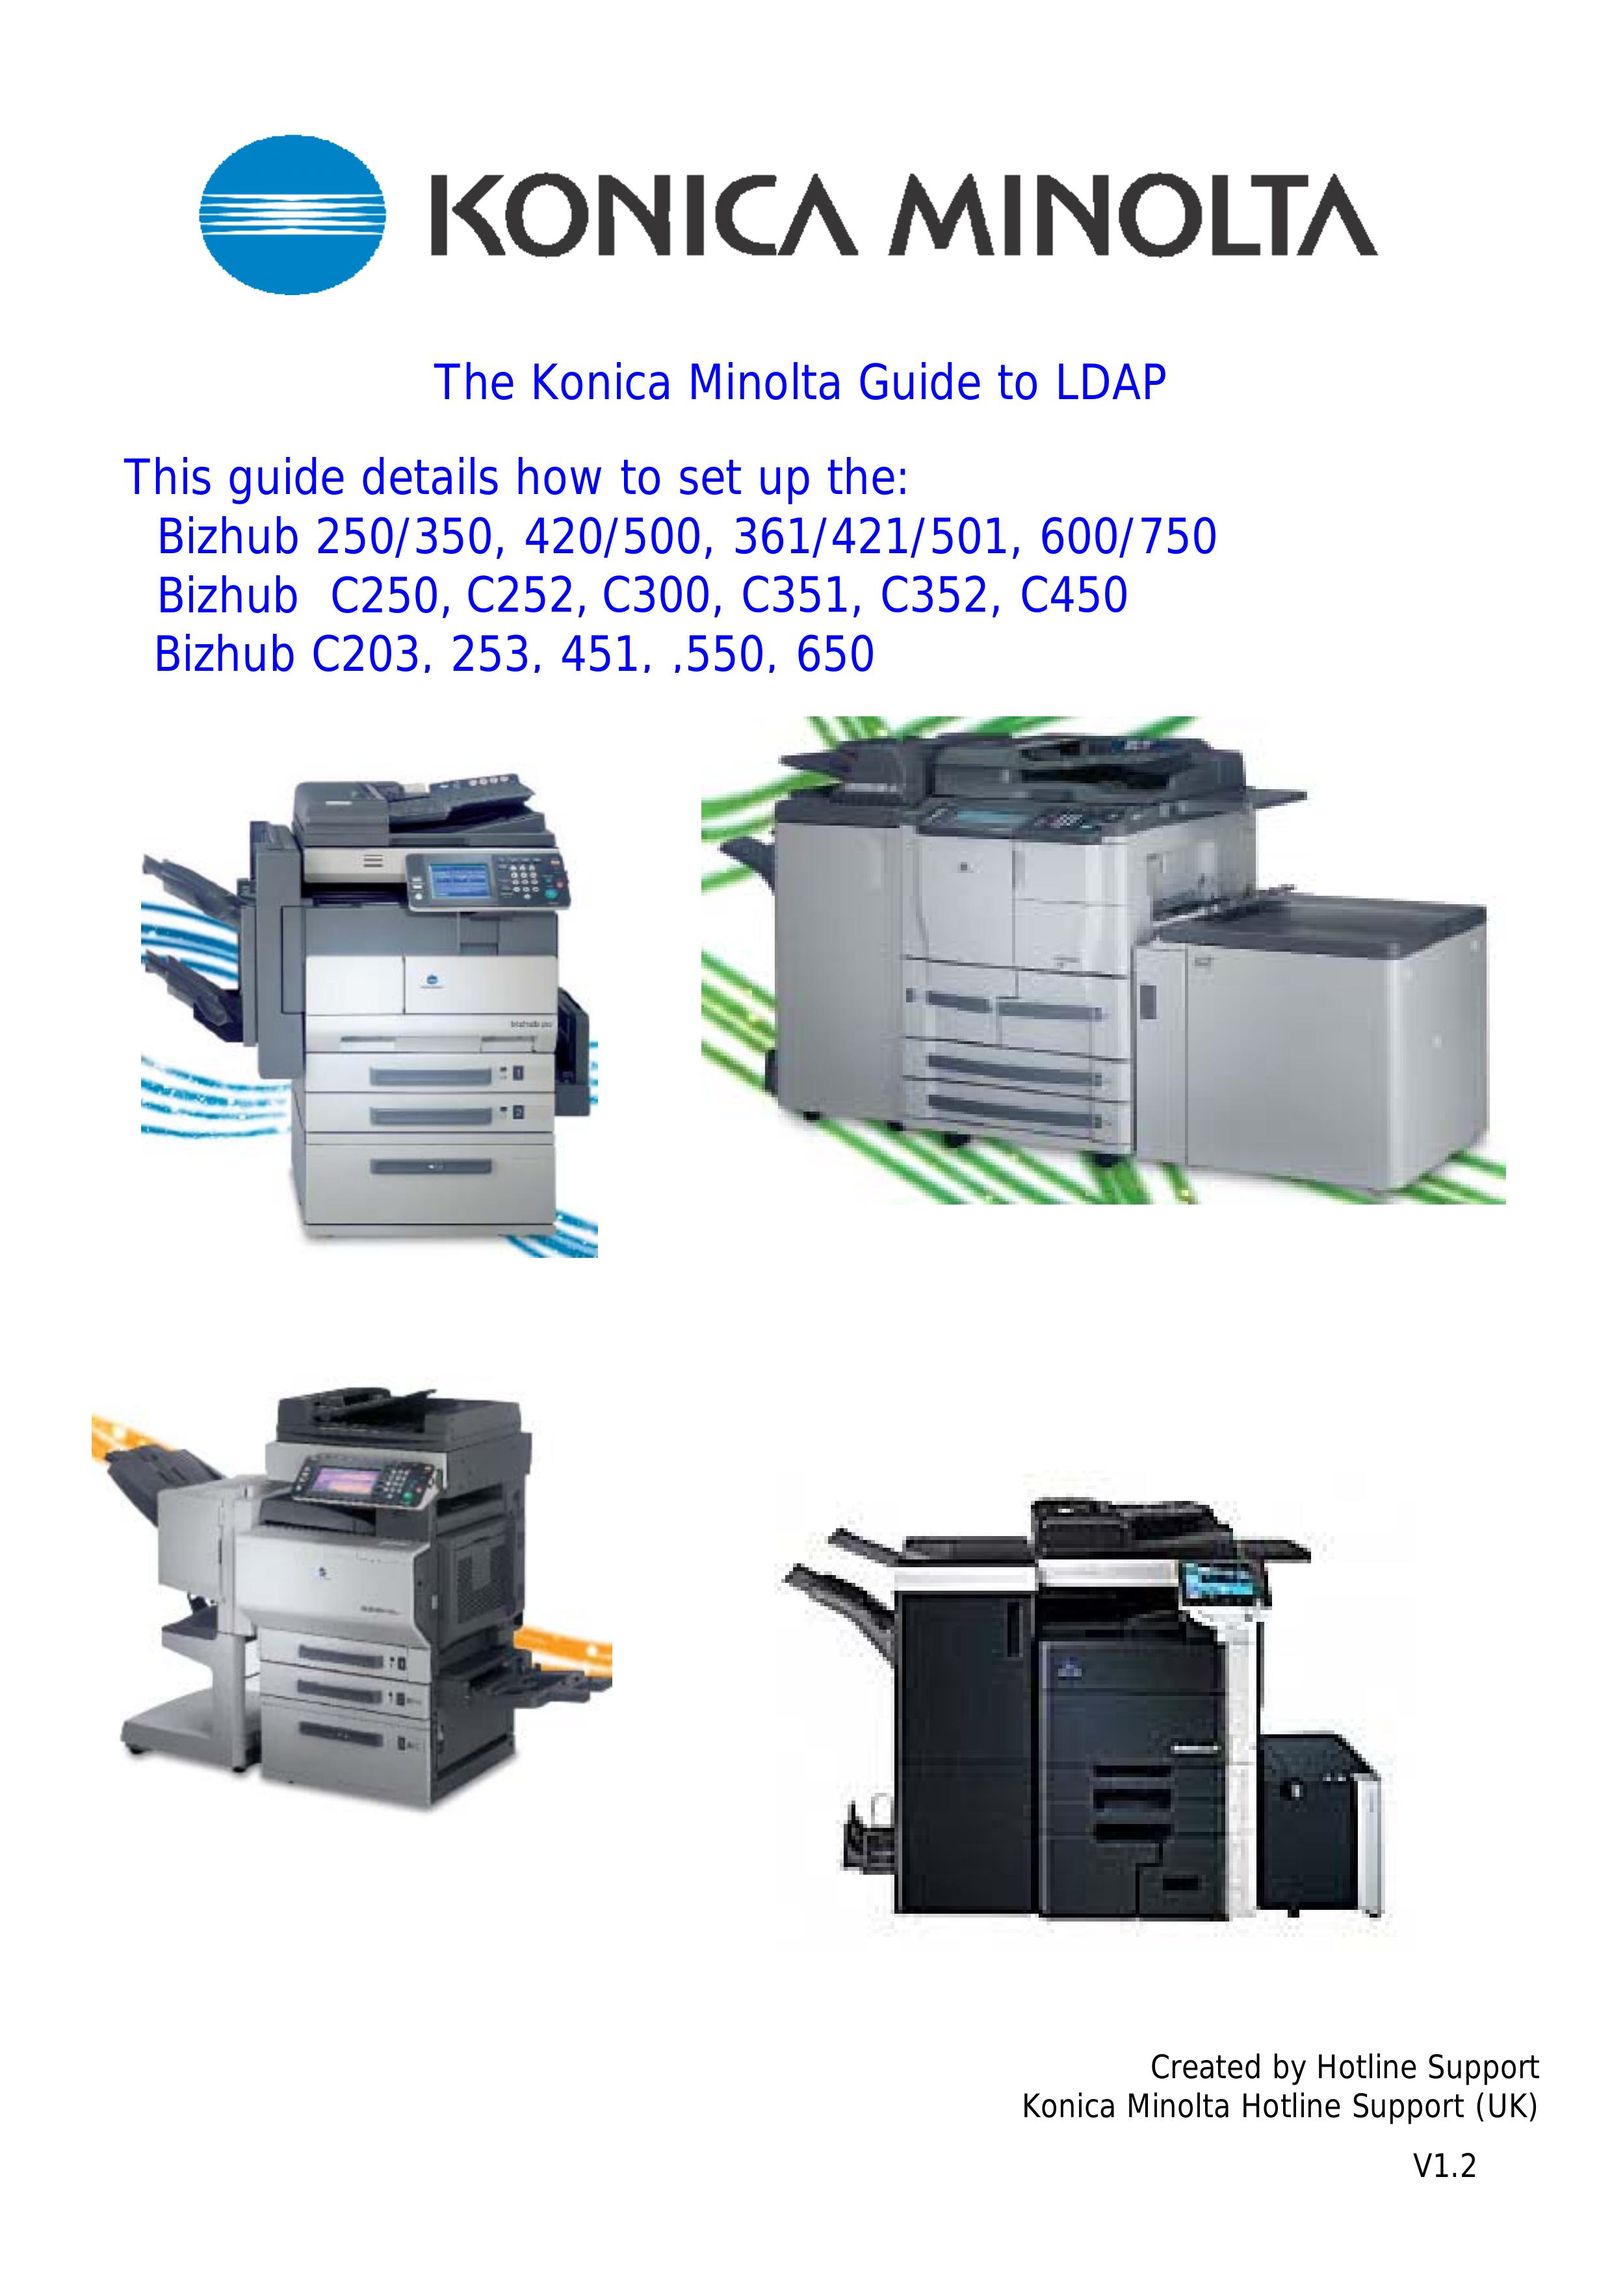 Konica Minolta 420/500 All in One Printer User Manual